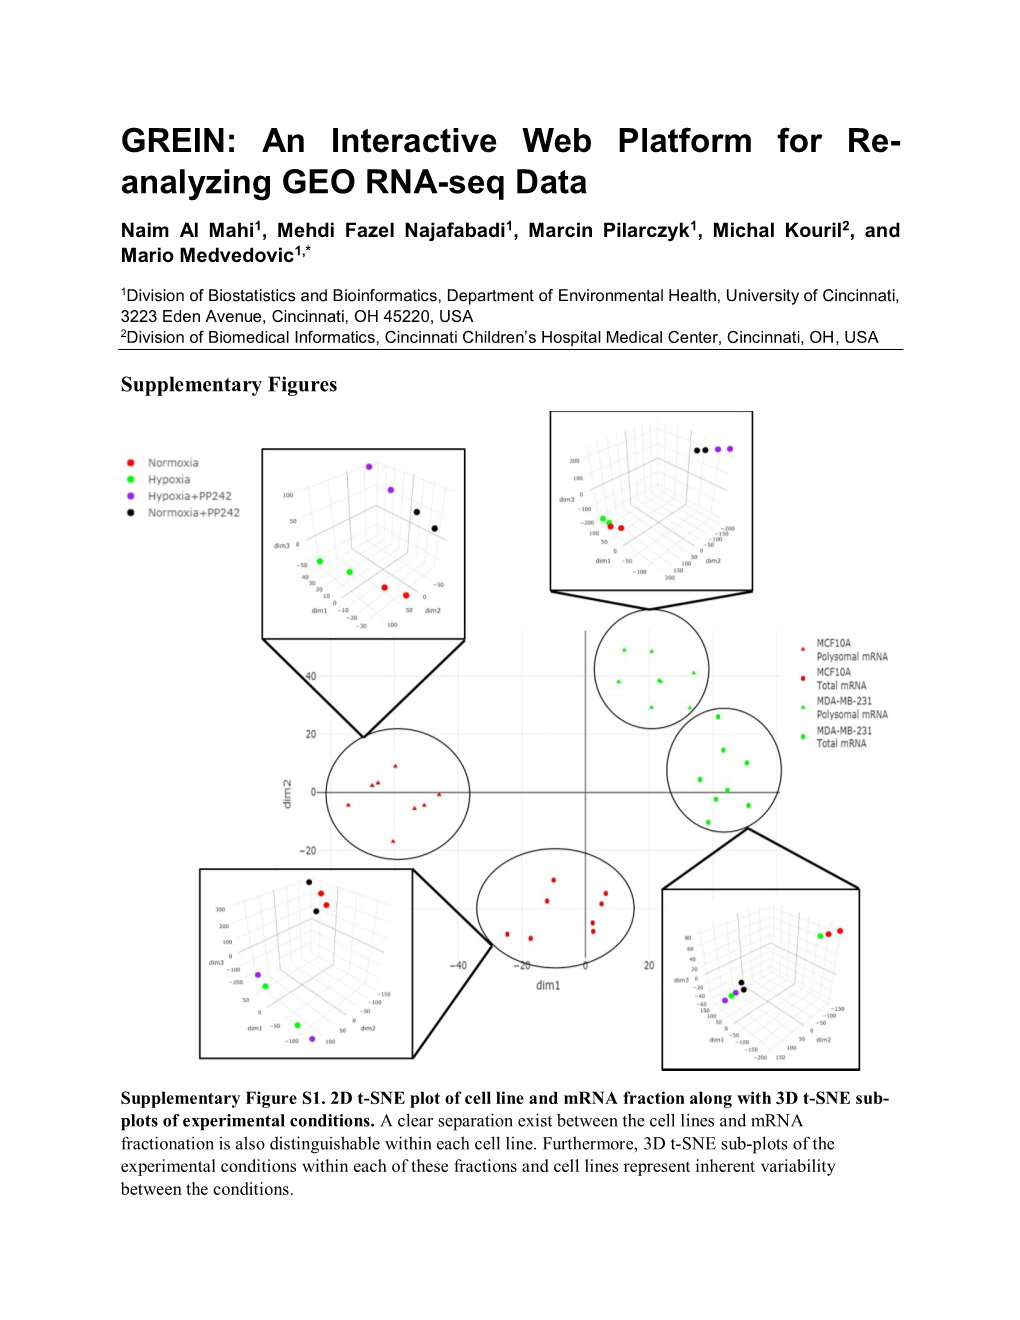 GREIN: an Interactive Web Platform for Re- Analyzing GEO RNA-Seq Data